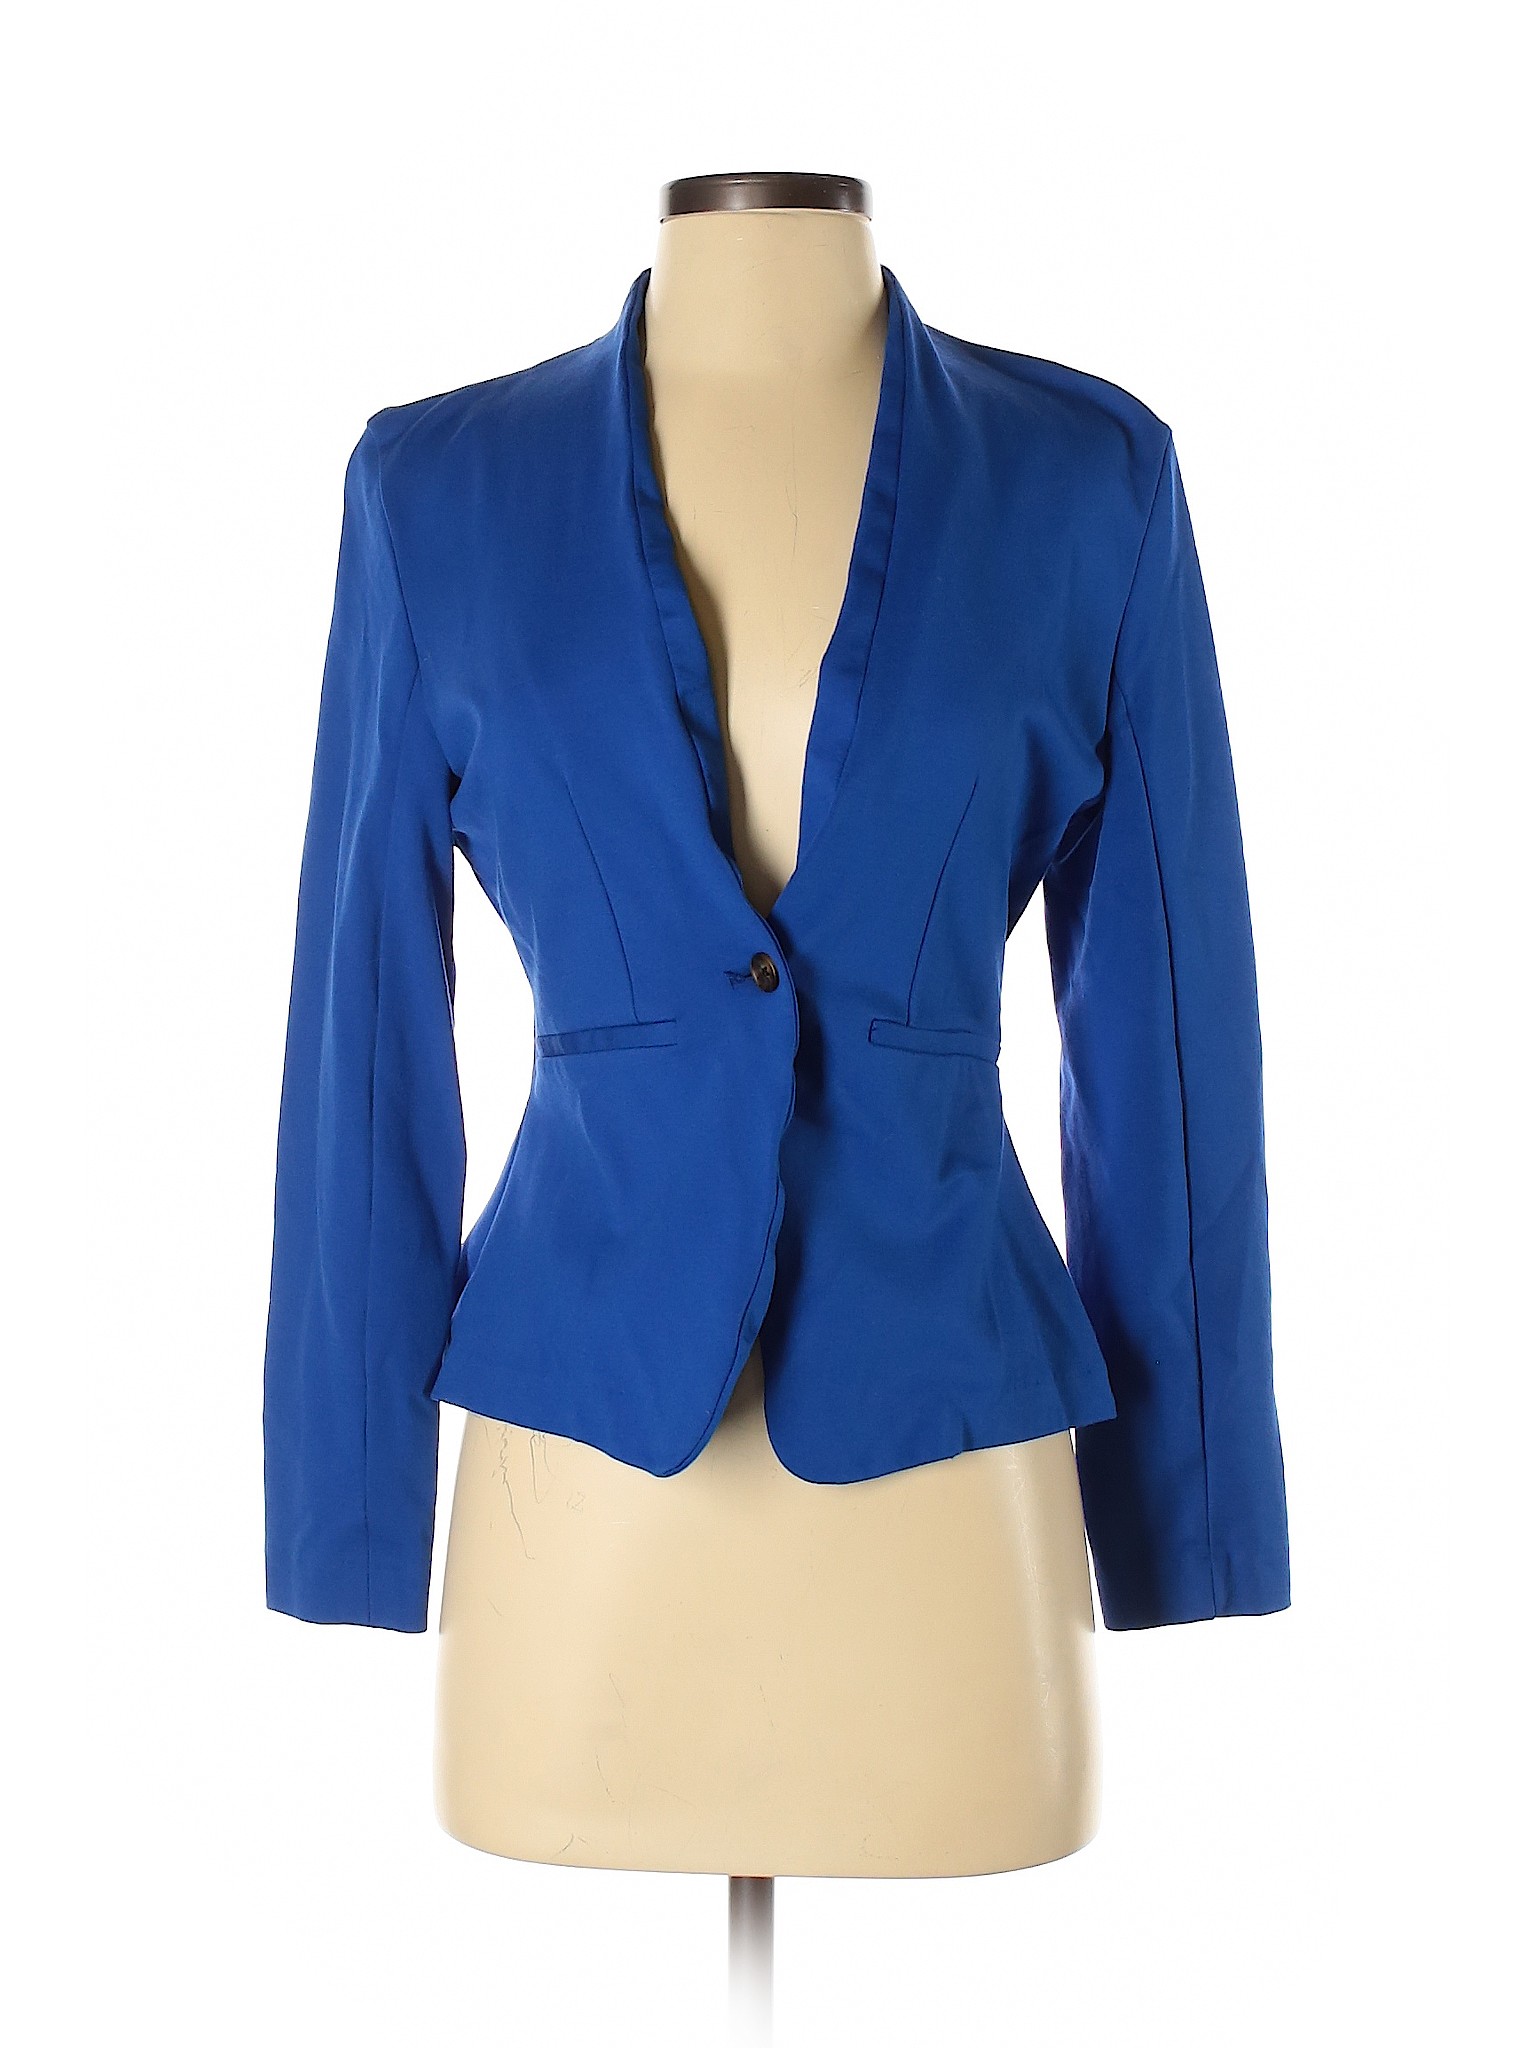 Simply Styled Women Blue Blazer S | eBay